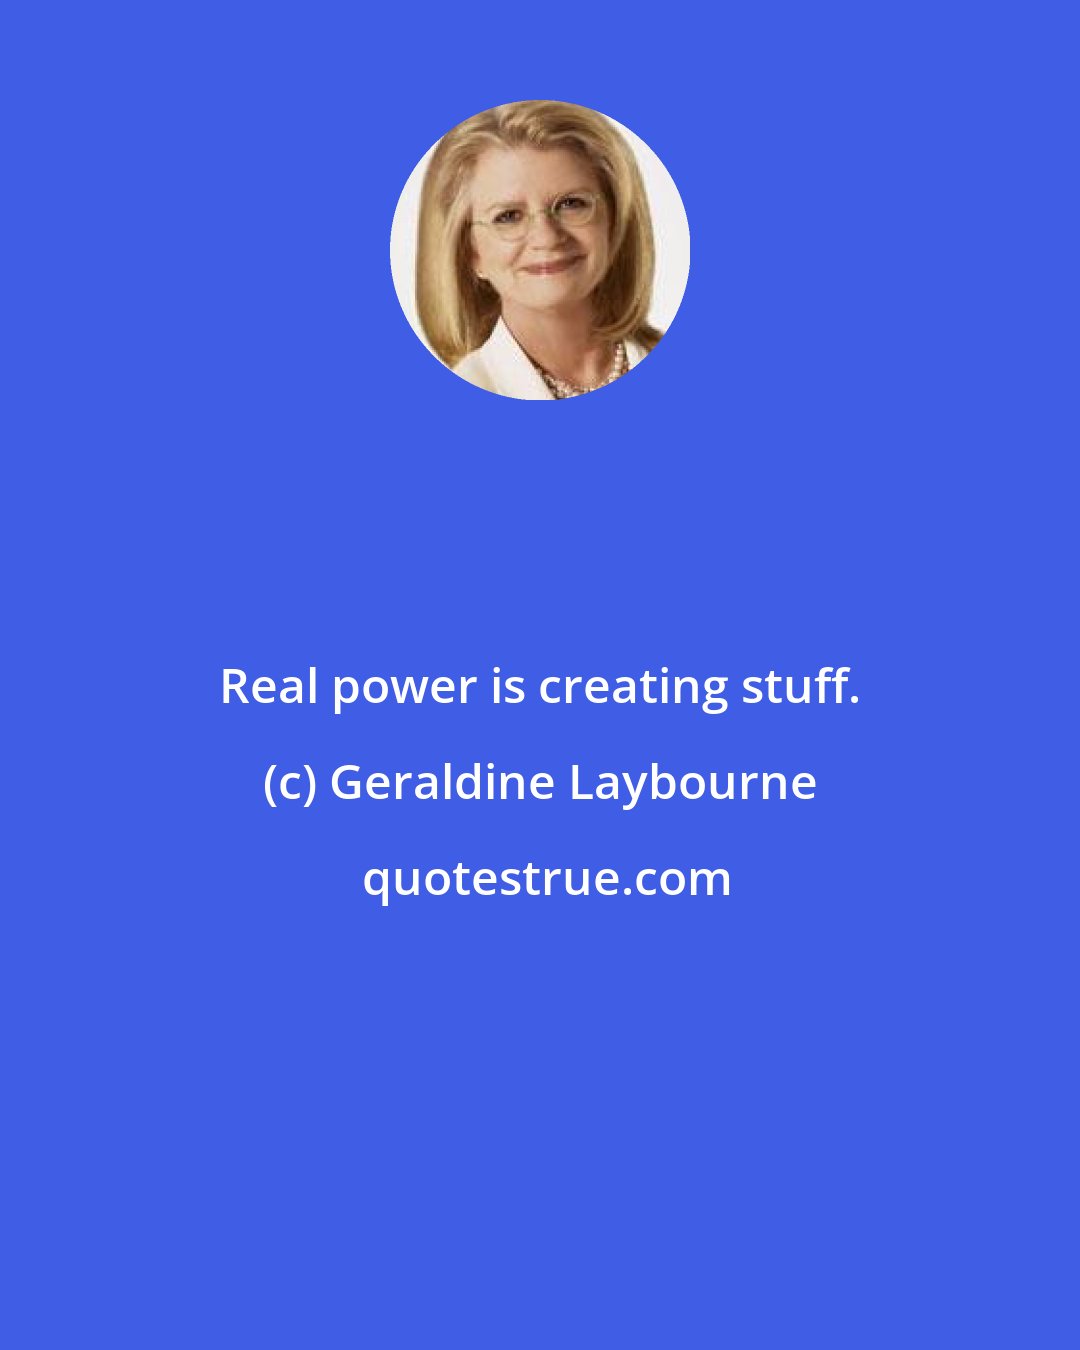 Geraldine Laybourne: Real power is creating stuff.